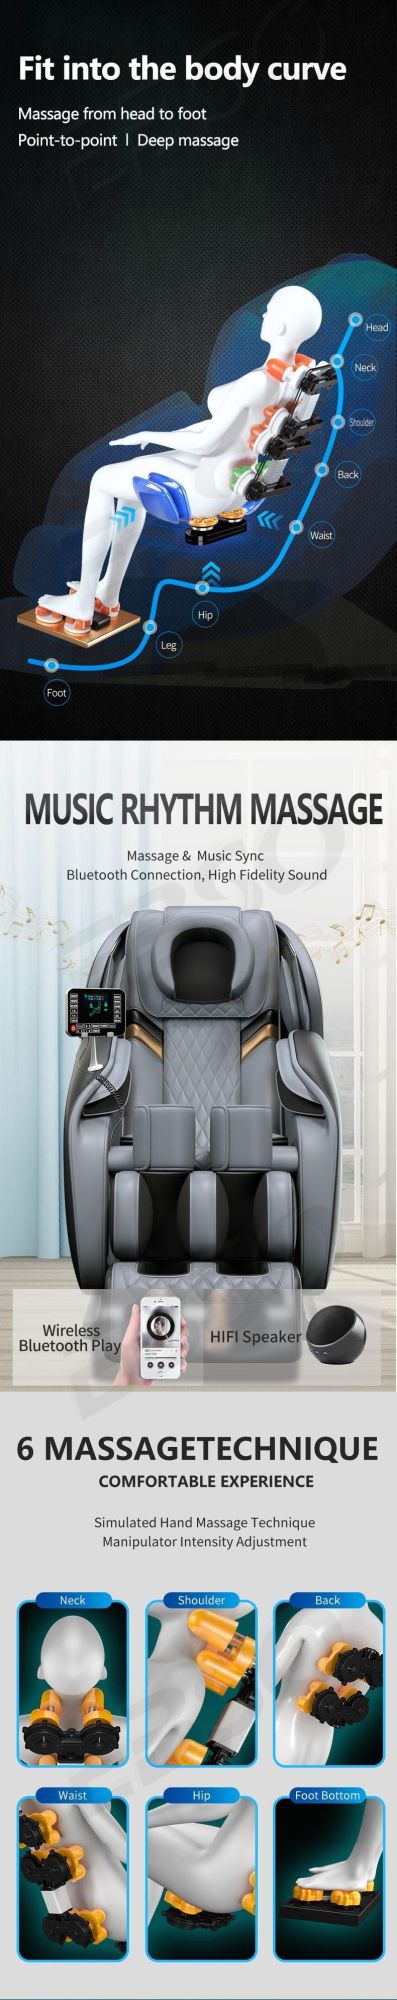 2020 New Design 3D Zero Gravity Double SL-Shaped Full Body Massage Chair